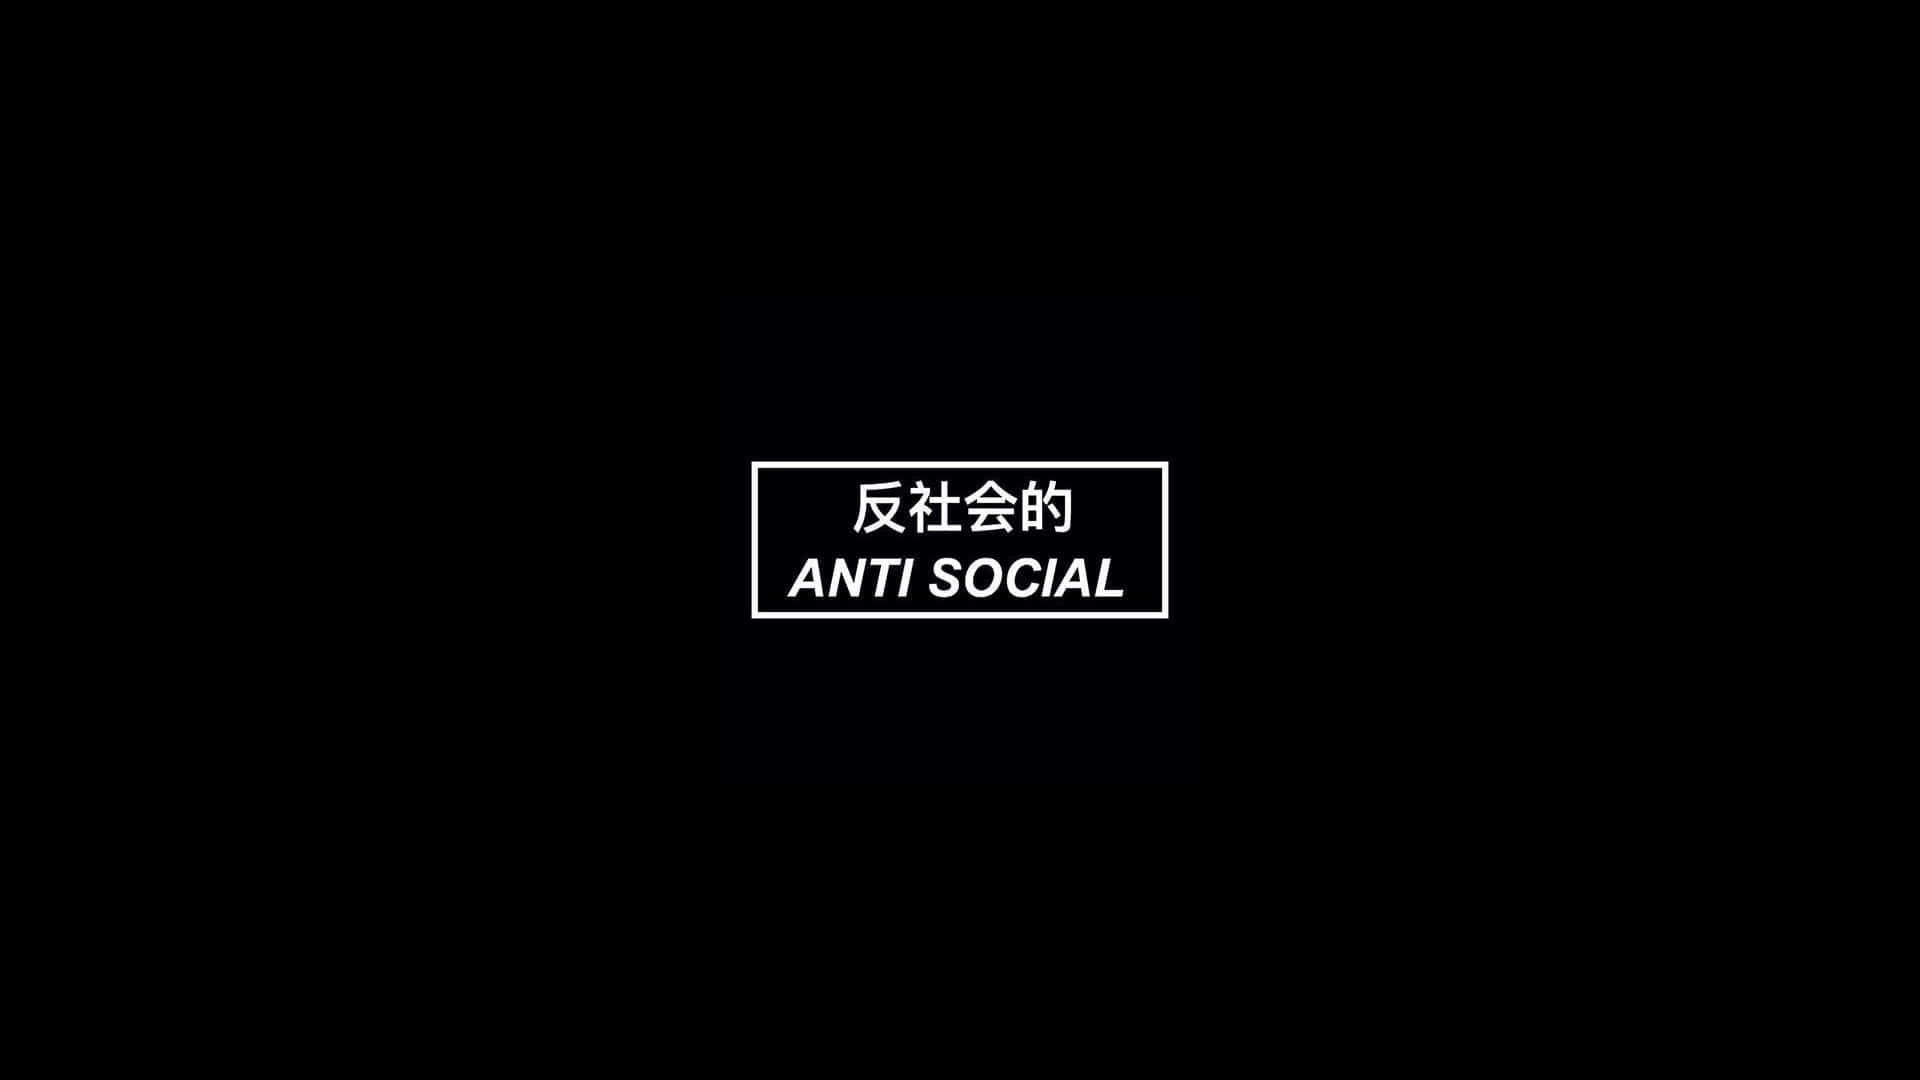 Antisocial - Chinese - Tv - Tv - Tv - Tv - T